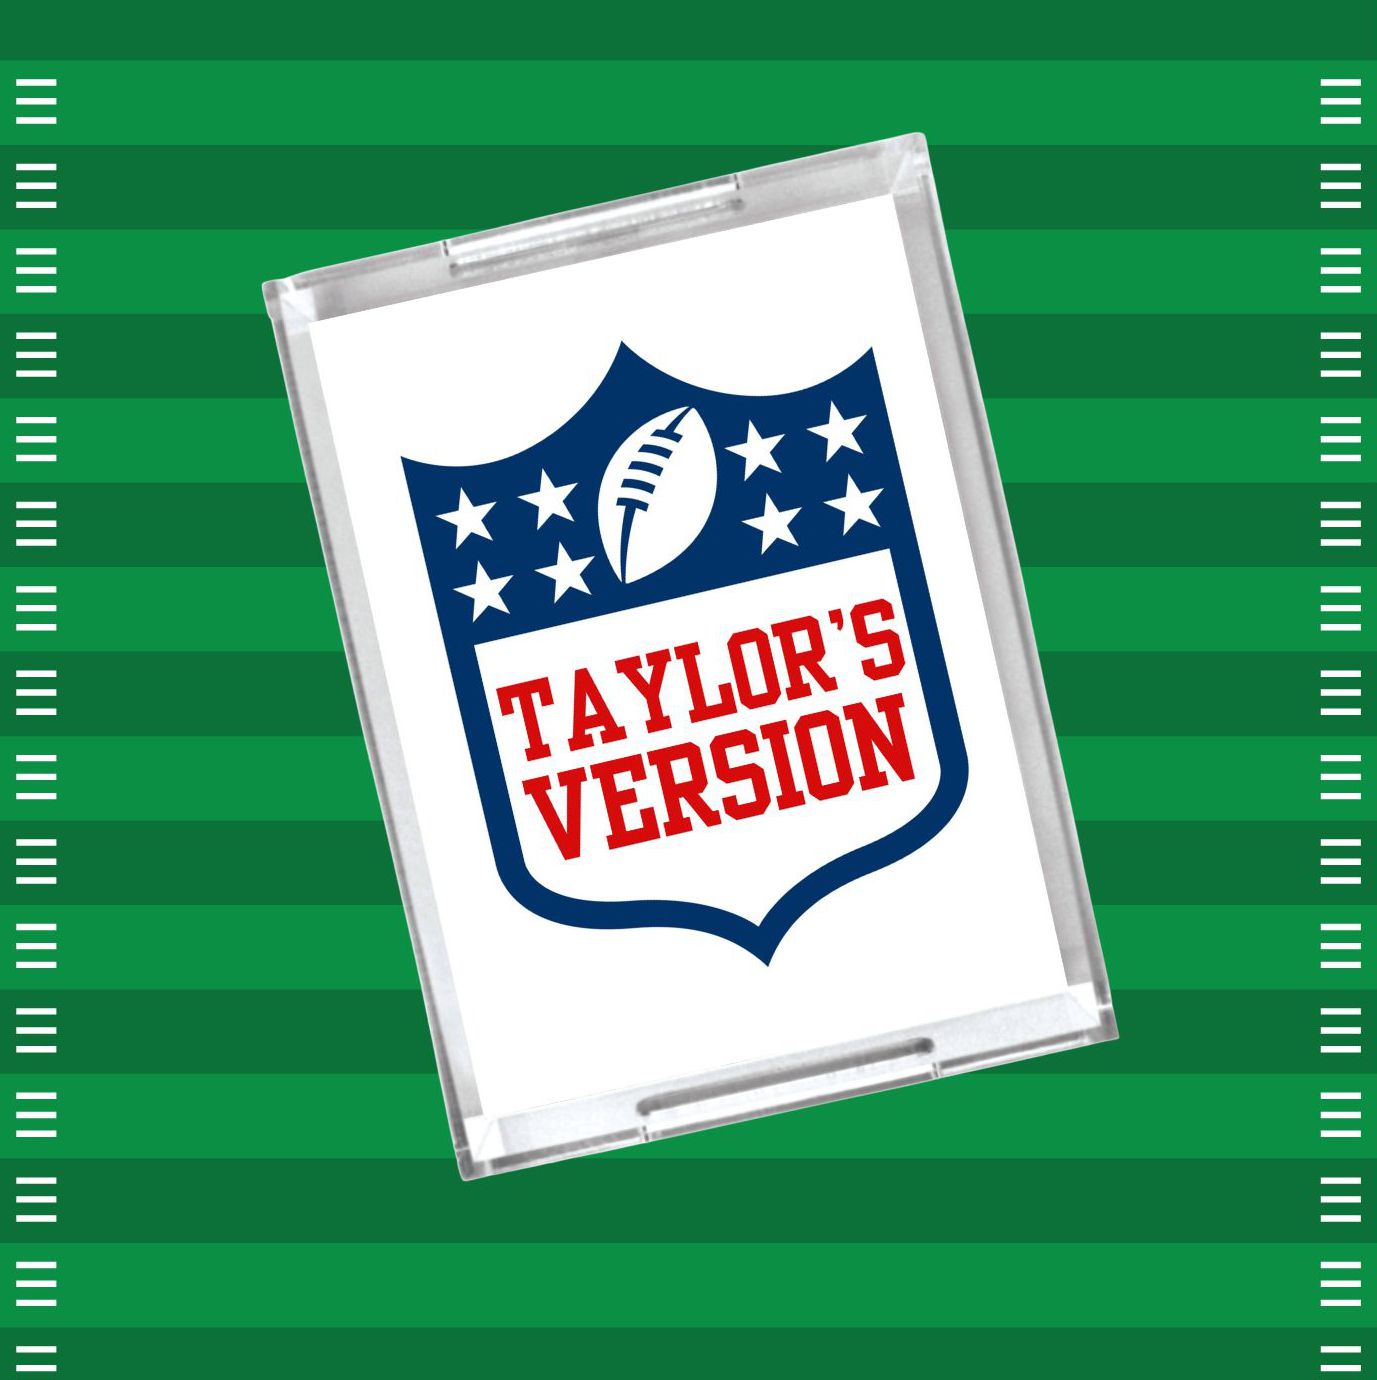 Super Bowl Acrylic Serving Tray - Taylor's Version